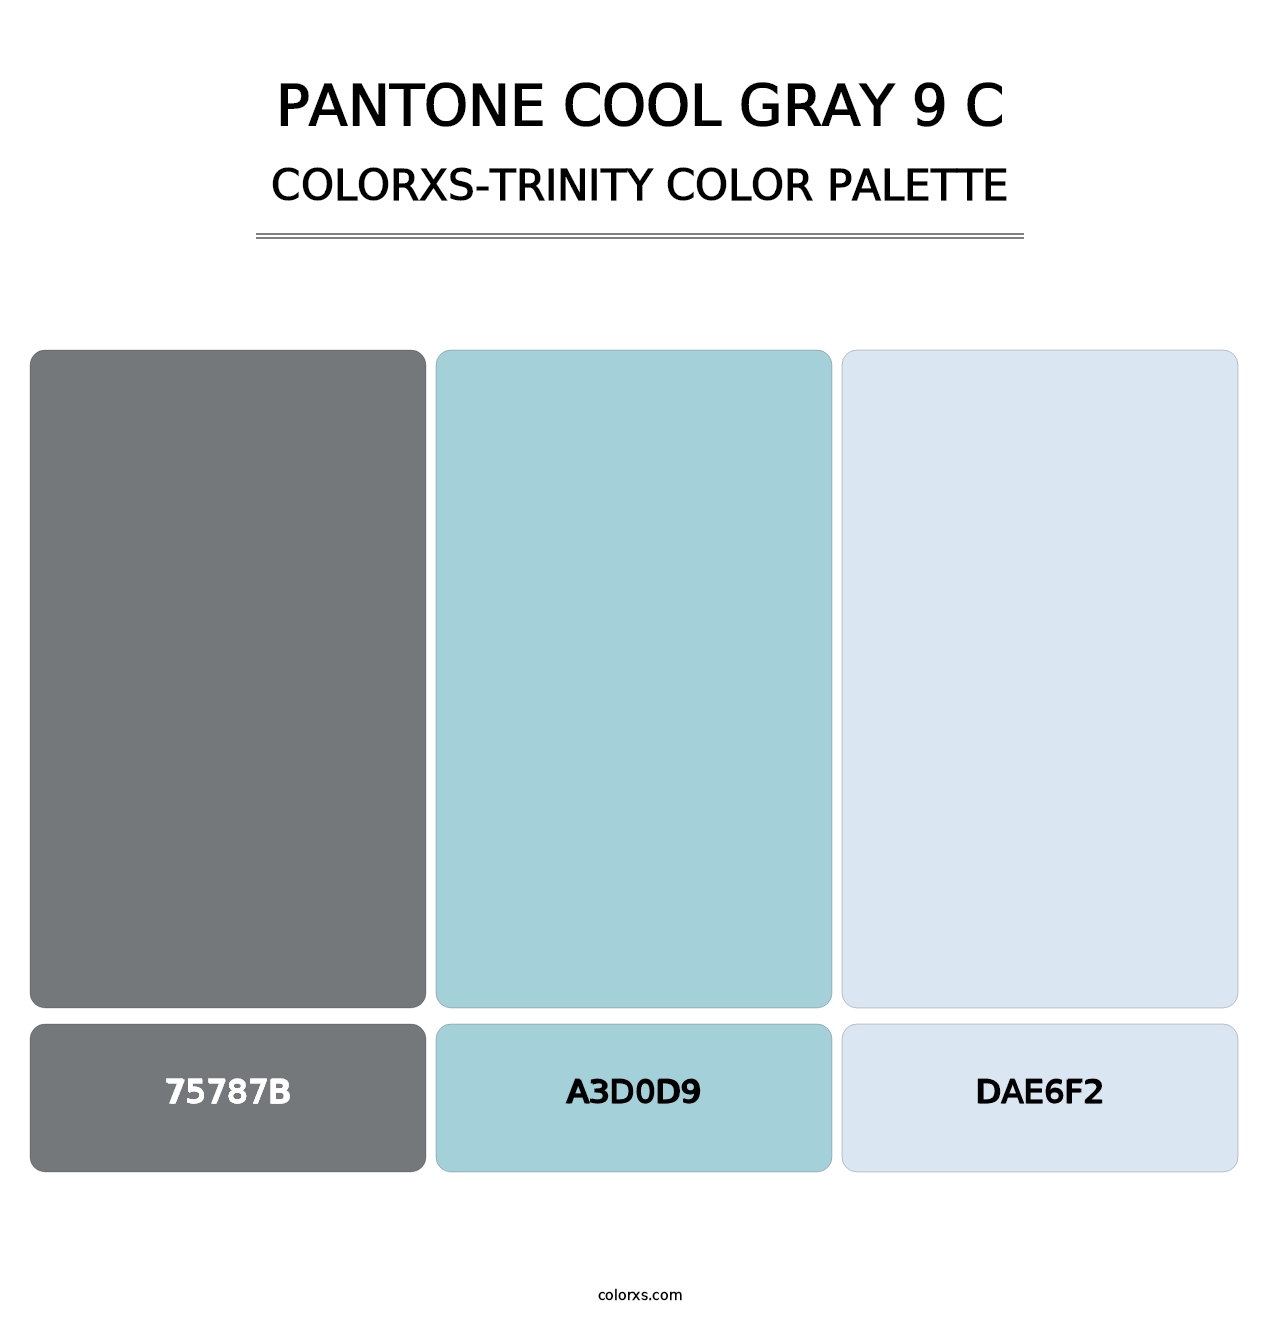 PANTONE Cool Gray 9 C - Colorxs Trinity Palette